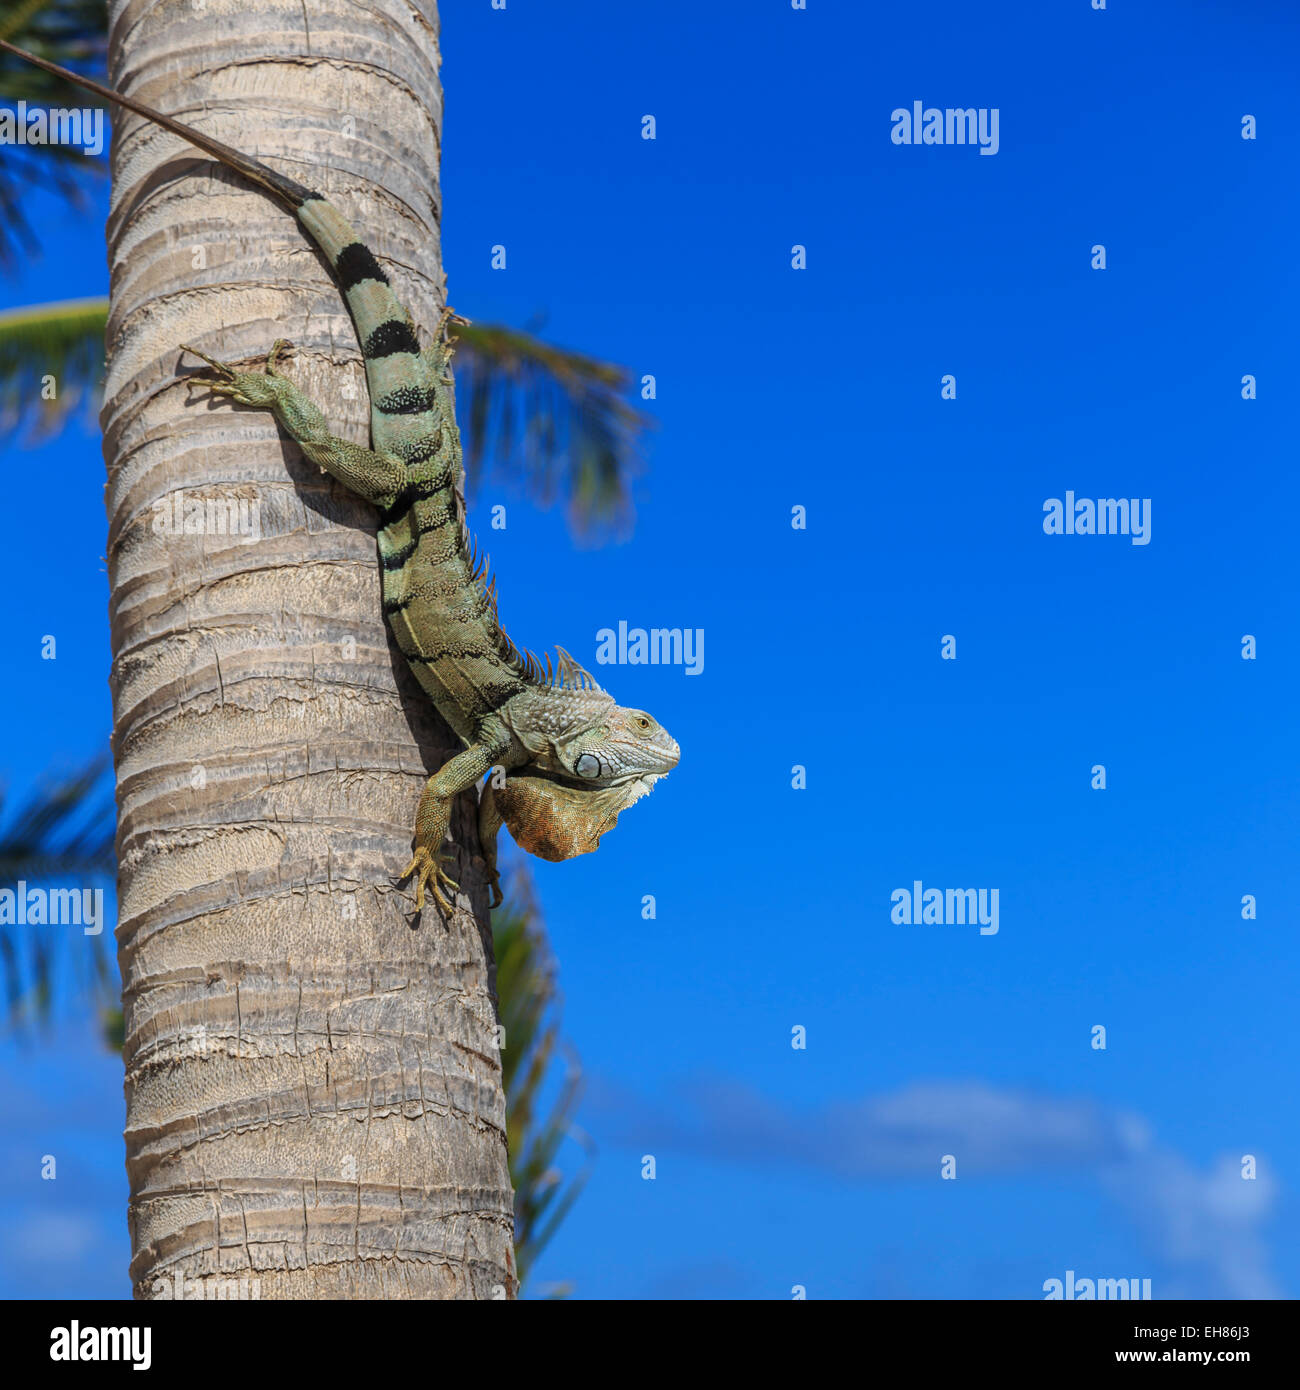 Green iguana (iguana iguana) in profile with raised head against blue sky, Orient Beach, St. Martin (St. Maarten), West Indies Stock Photo